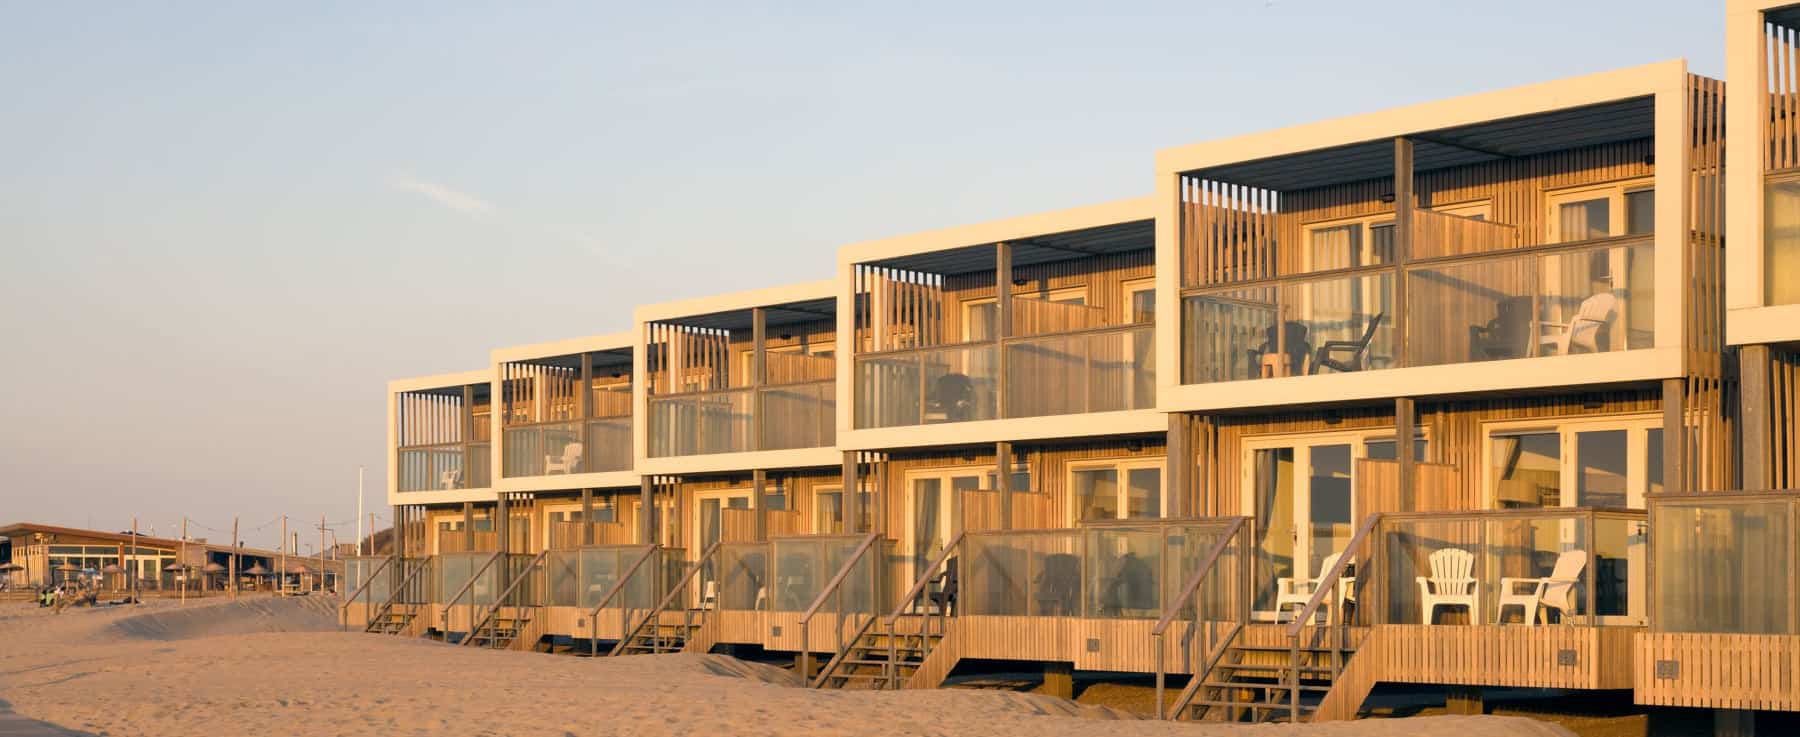 roompot largo beach villas hoek van holland